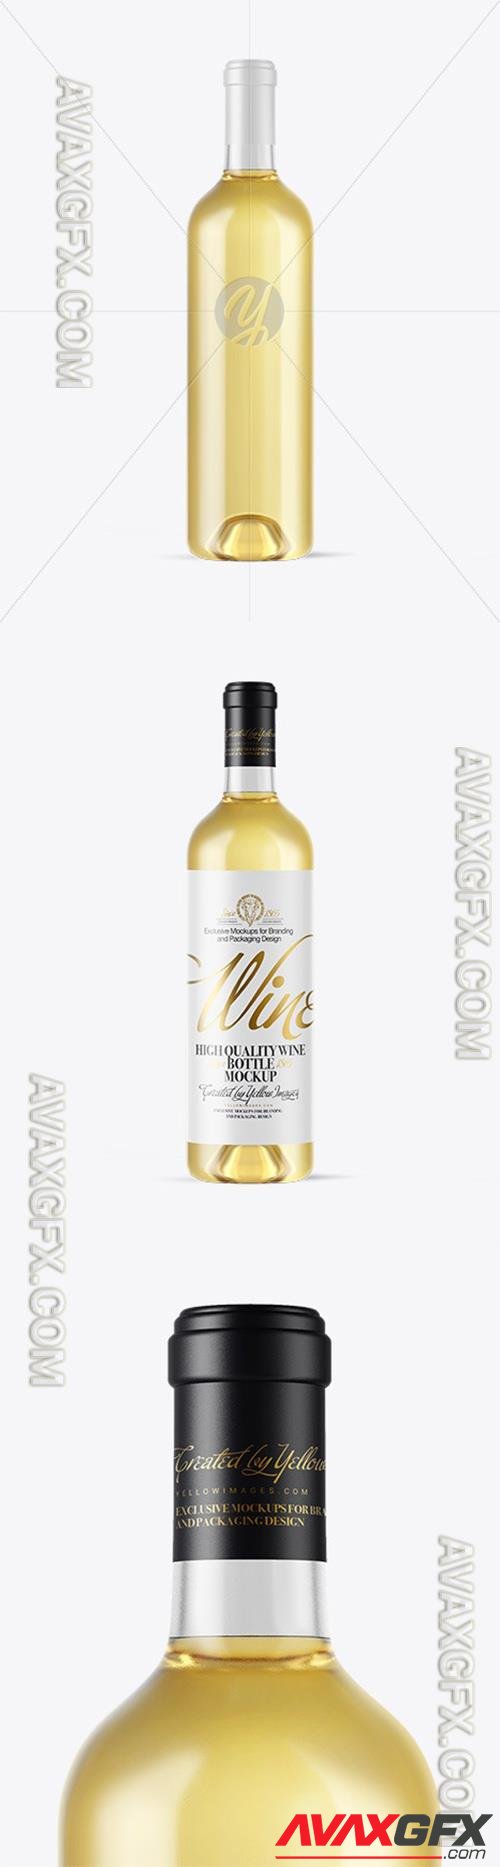 Clear Glass White Wine Bottle Mockup 48167 TIF